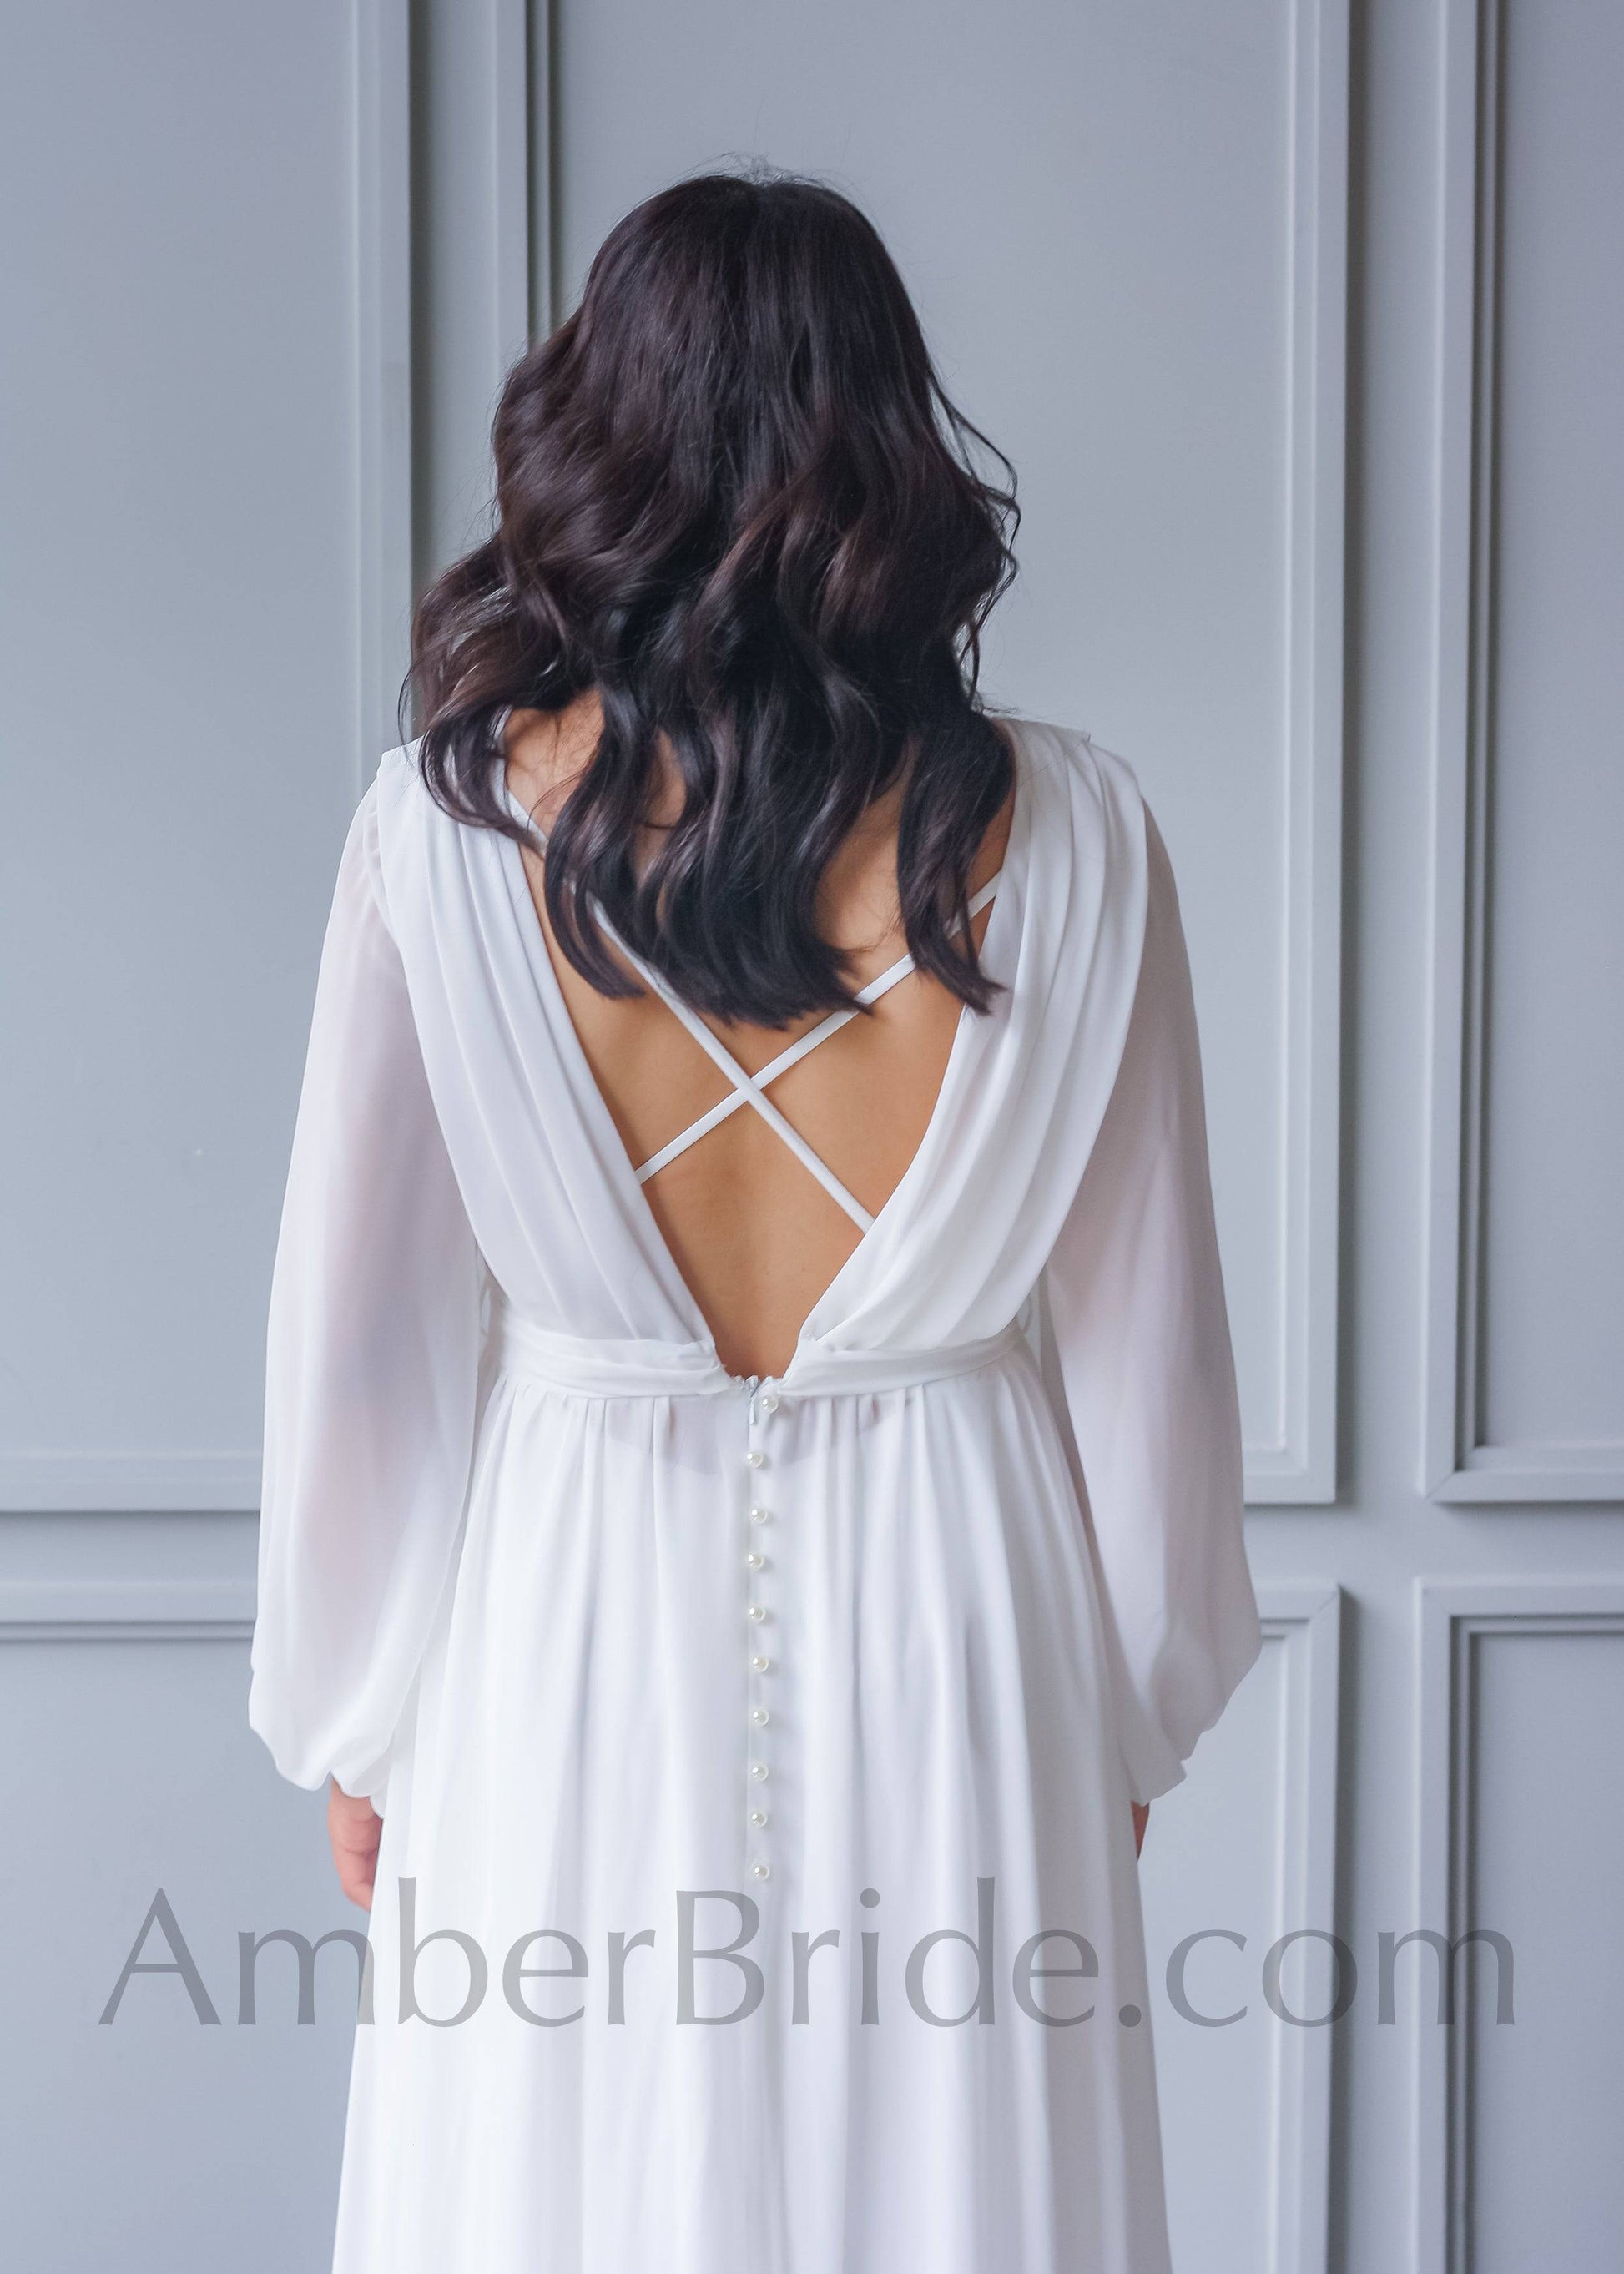 Exclusive A Line Long Puffy Sleeve Backless Chiffon Wedding Dress - AmberBride